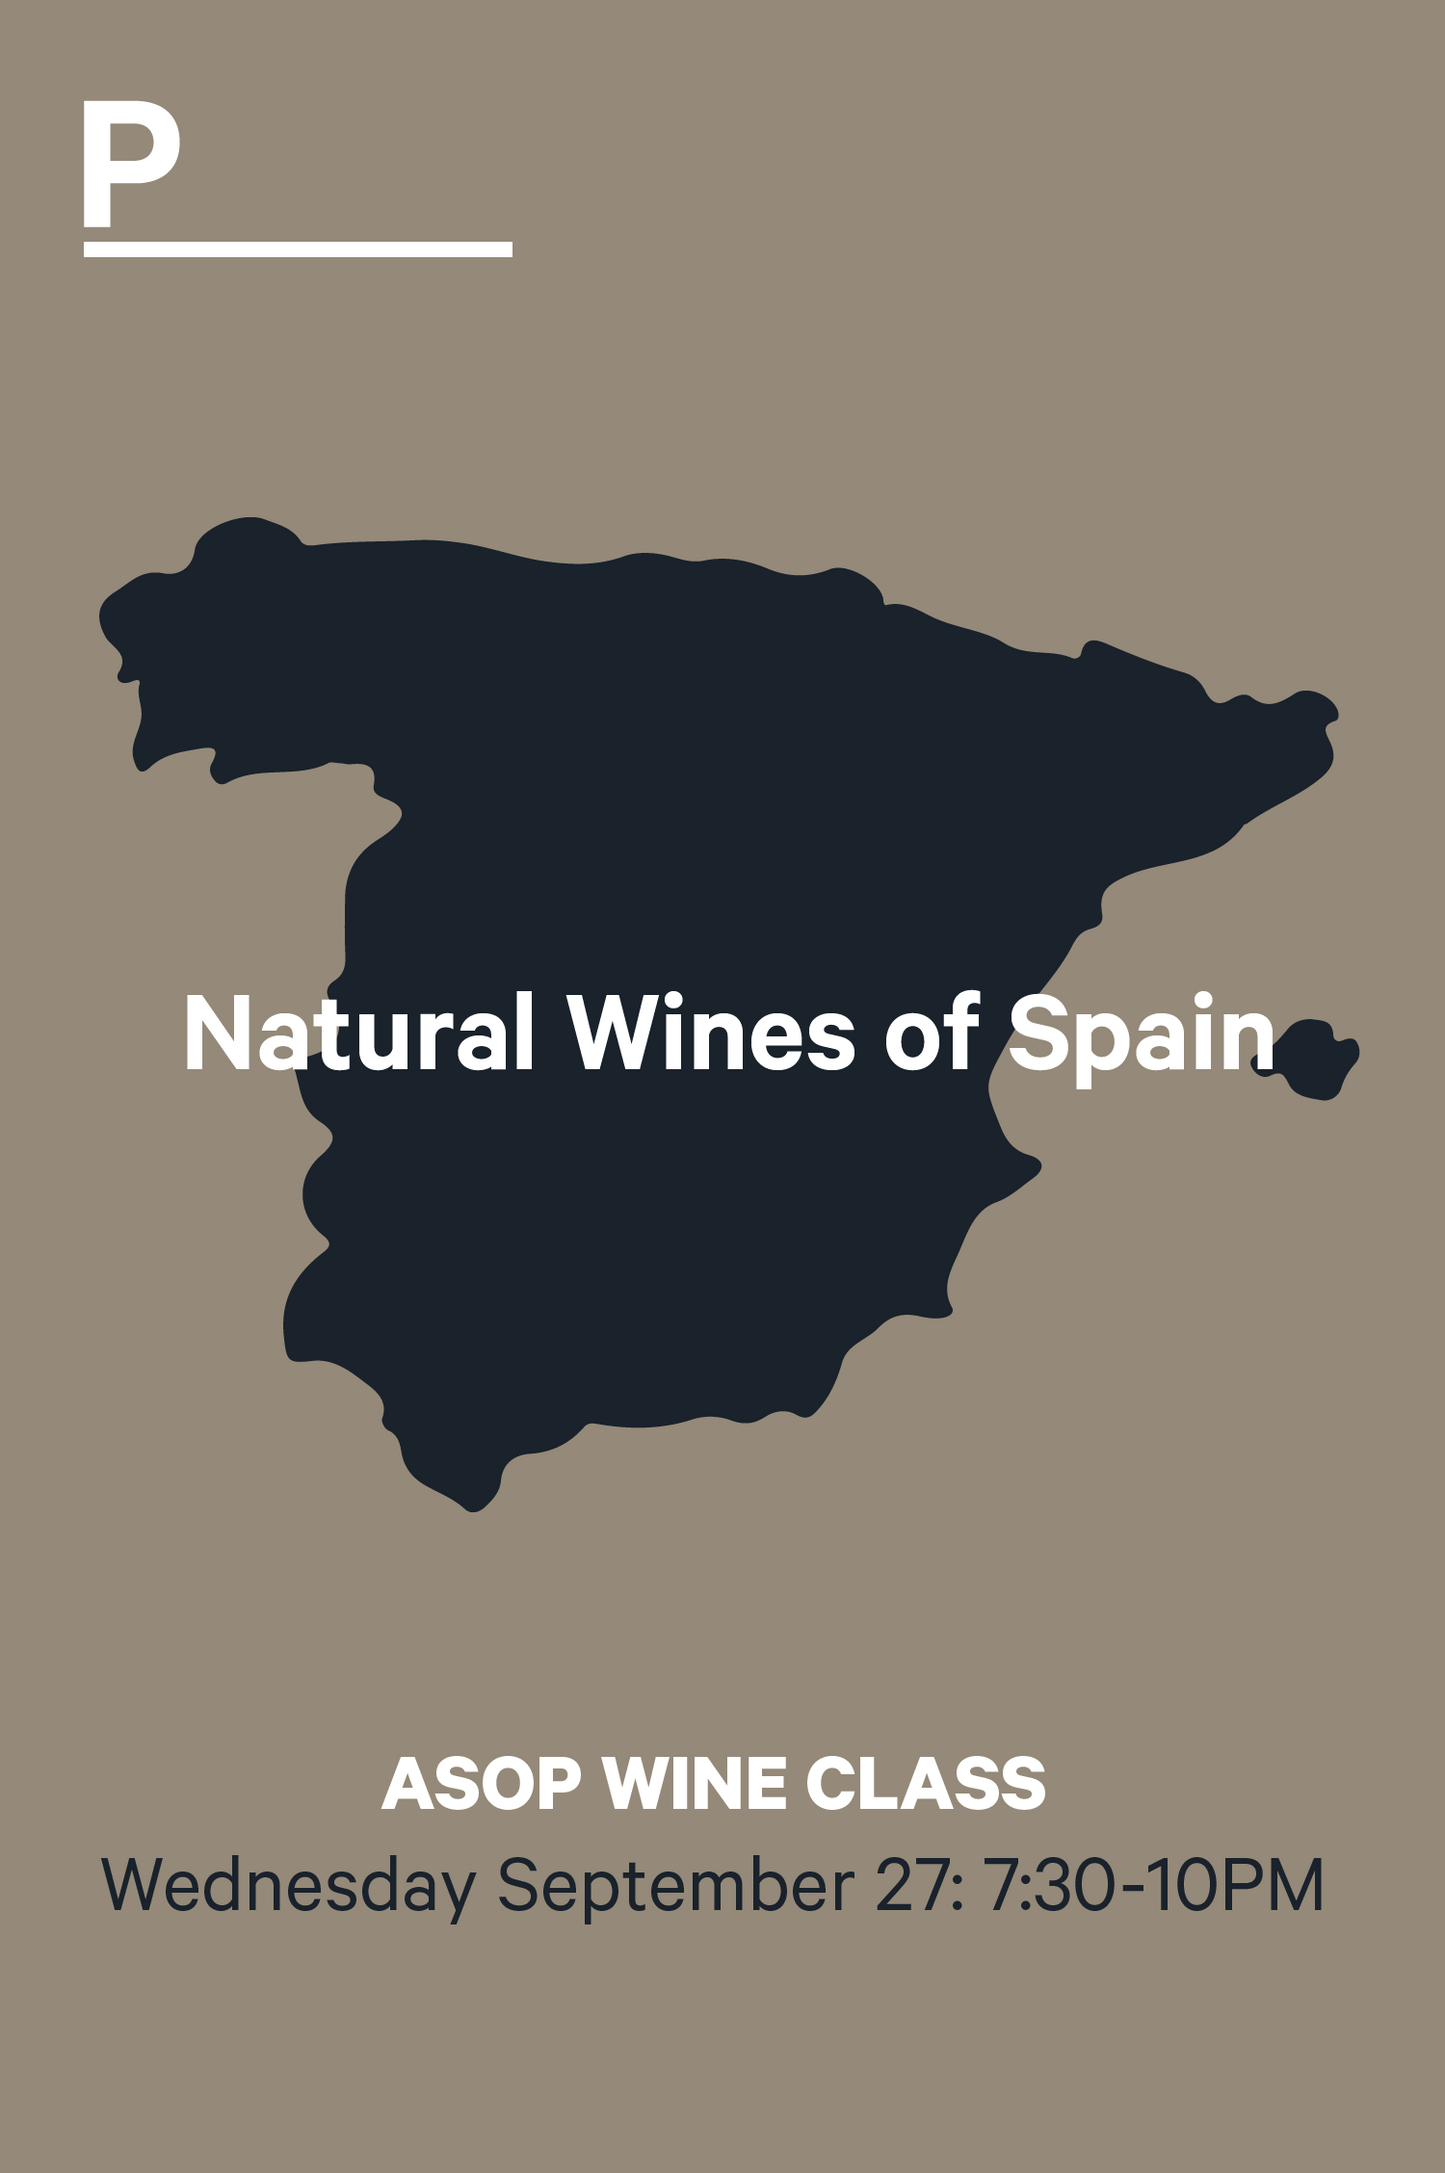 ASOP Wine Class: Natural Wines of Spain